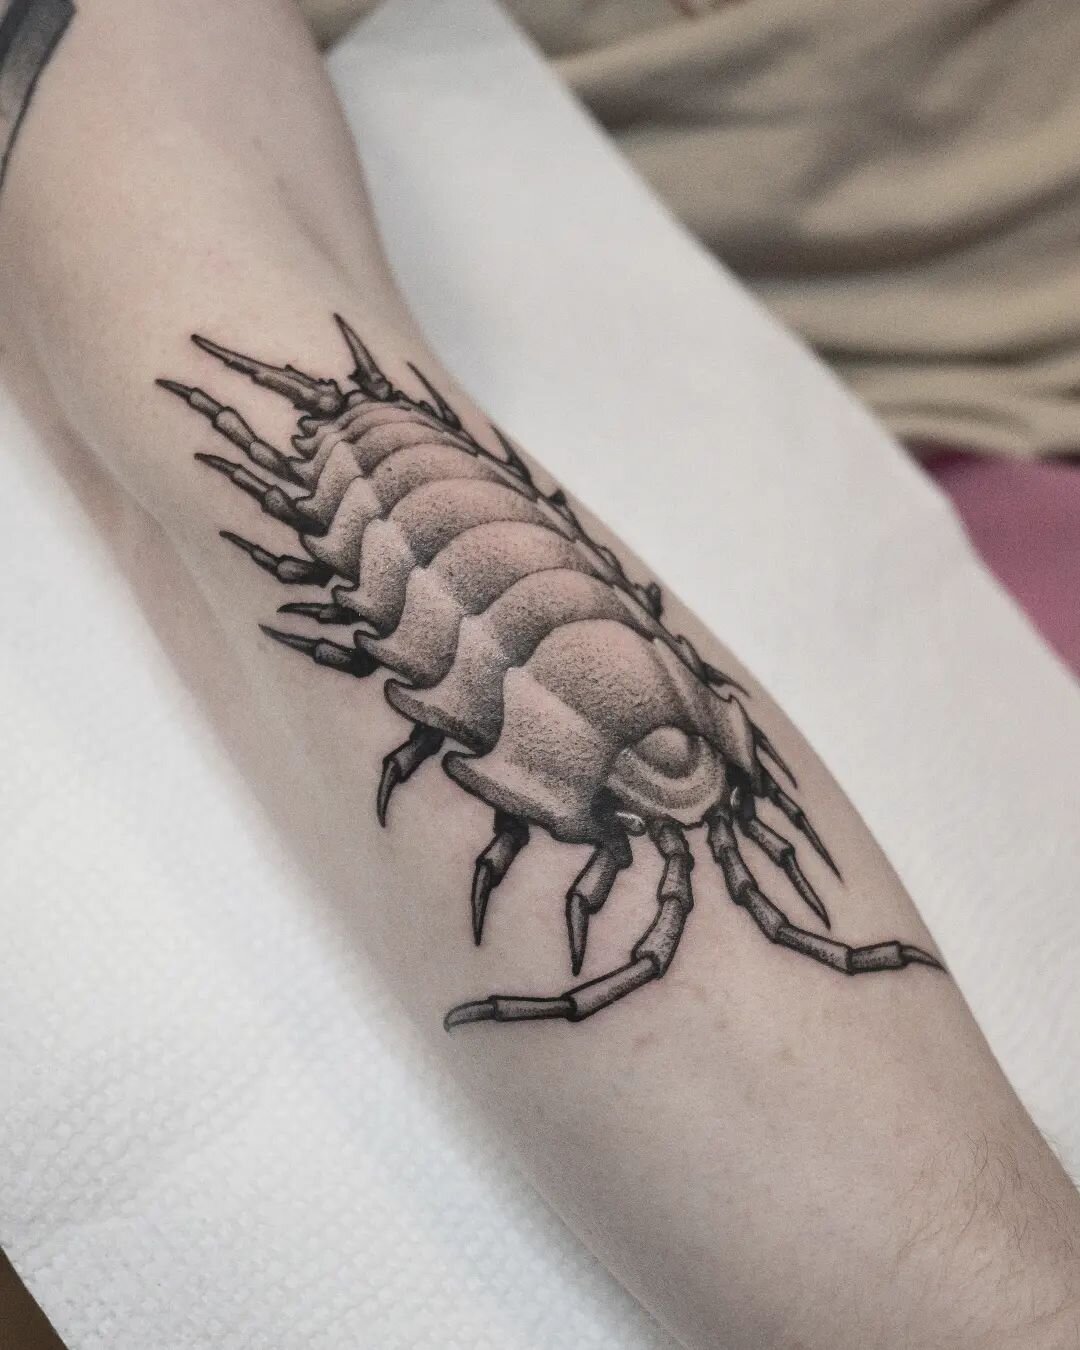 Isopod on @rat.lungworm 🌝
🐚
🐚
🐚
🐚
#isopod #bugs #tattoos #illustration #tattoo #darkartists #science #nature #blackwork #minneapolis #brooklyn #nyc #terrarium #vivarium